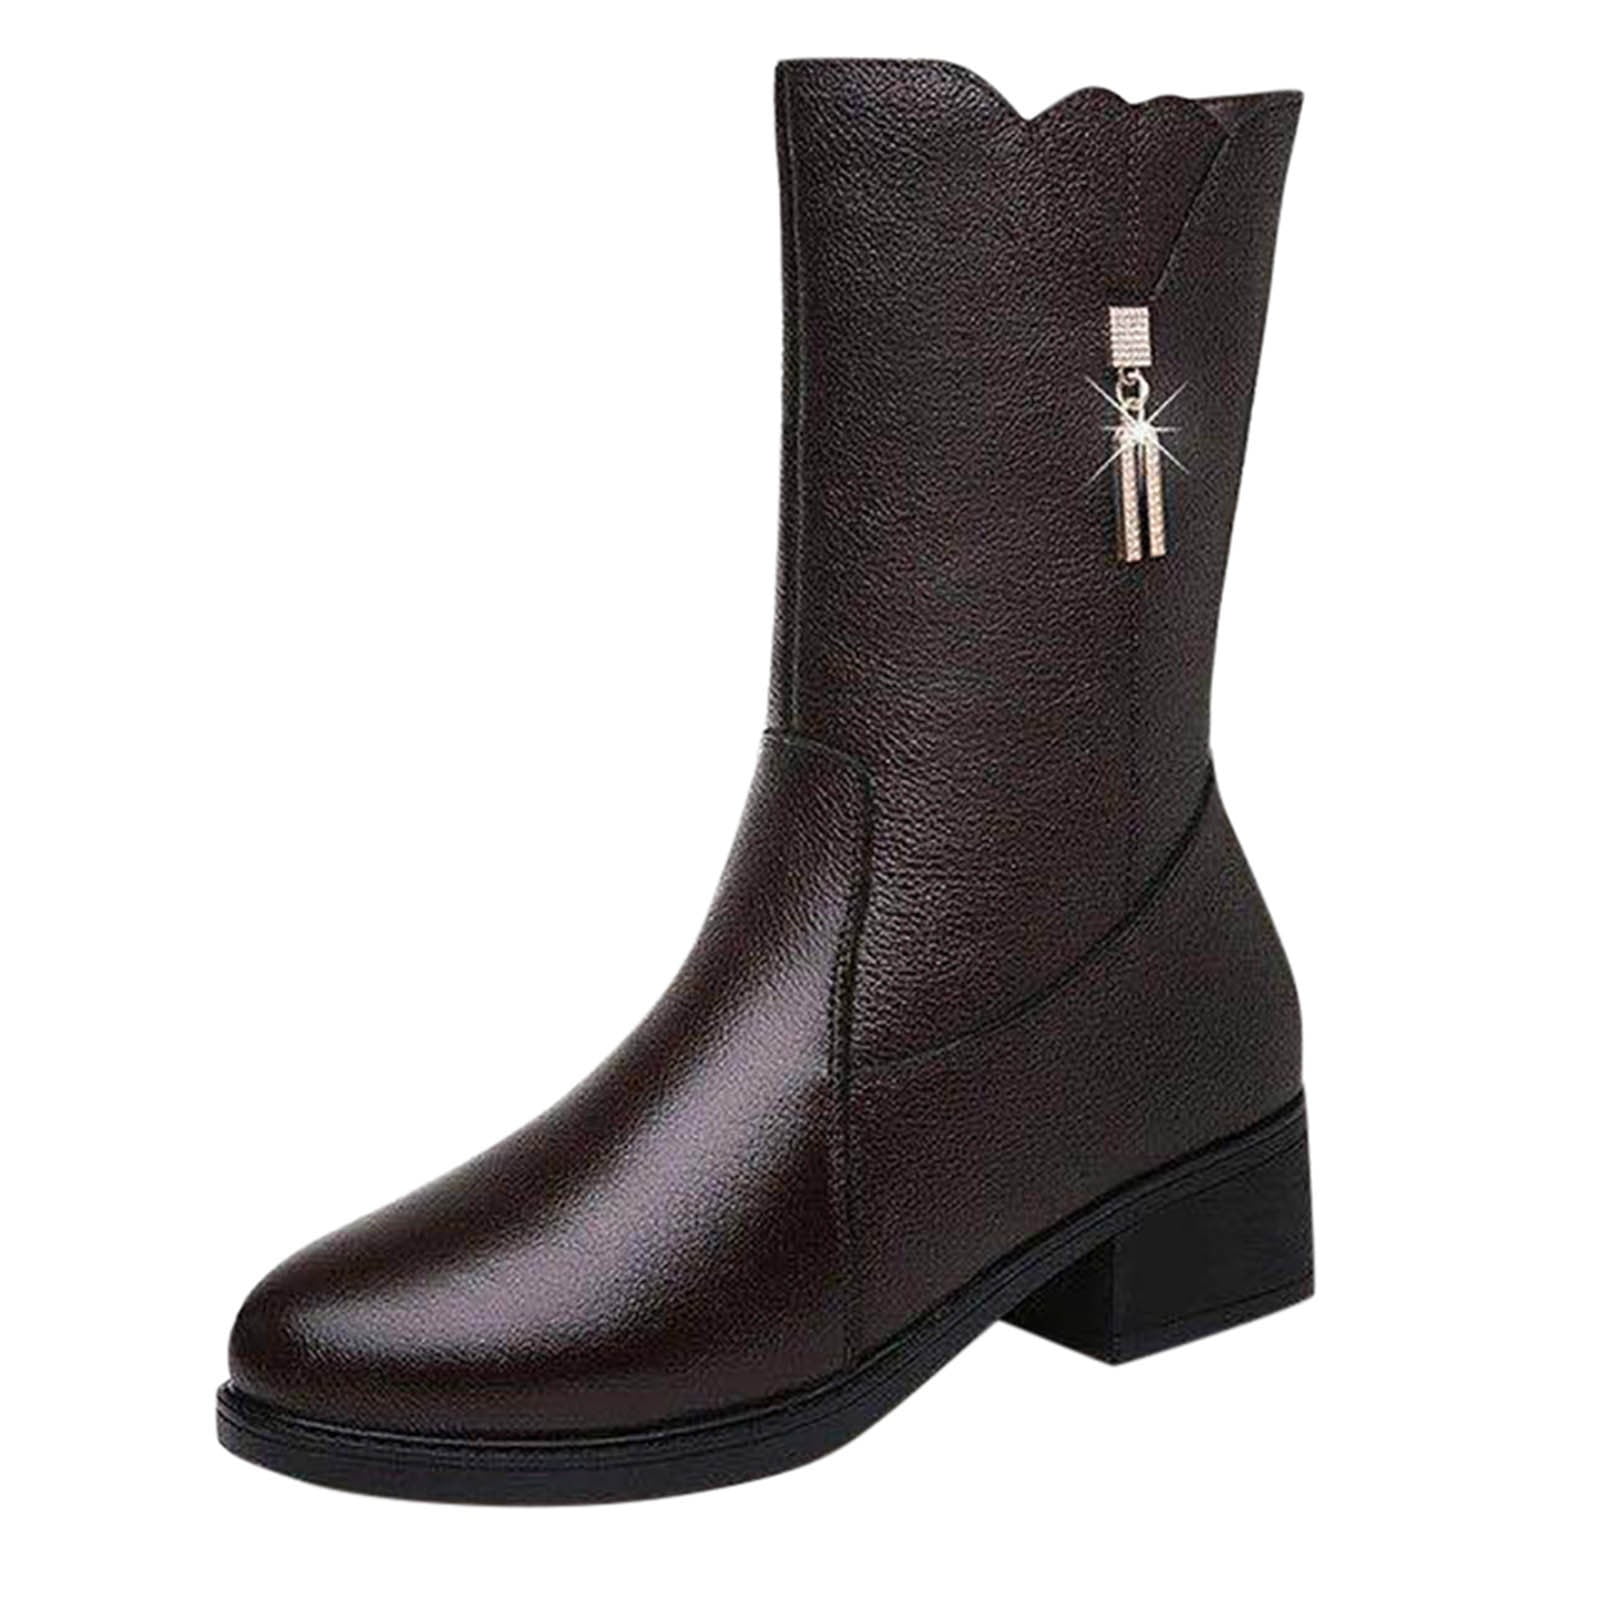 Ladies Women Winter Warm Casual Mid Calf Hard Sole Diamante Zip Boots Shoes Size 